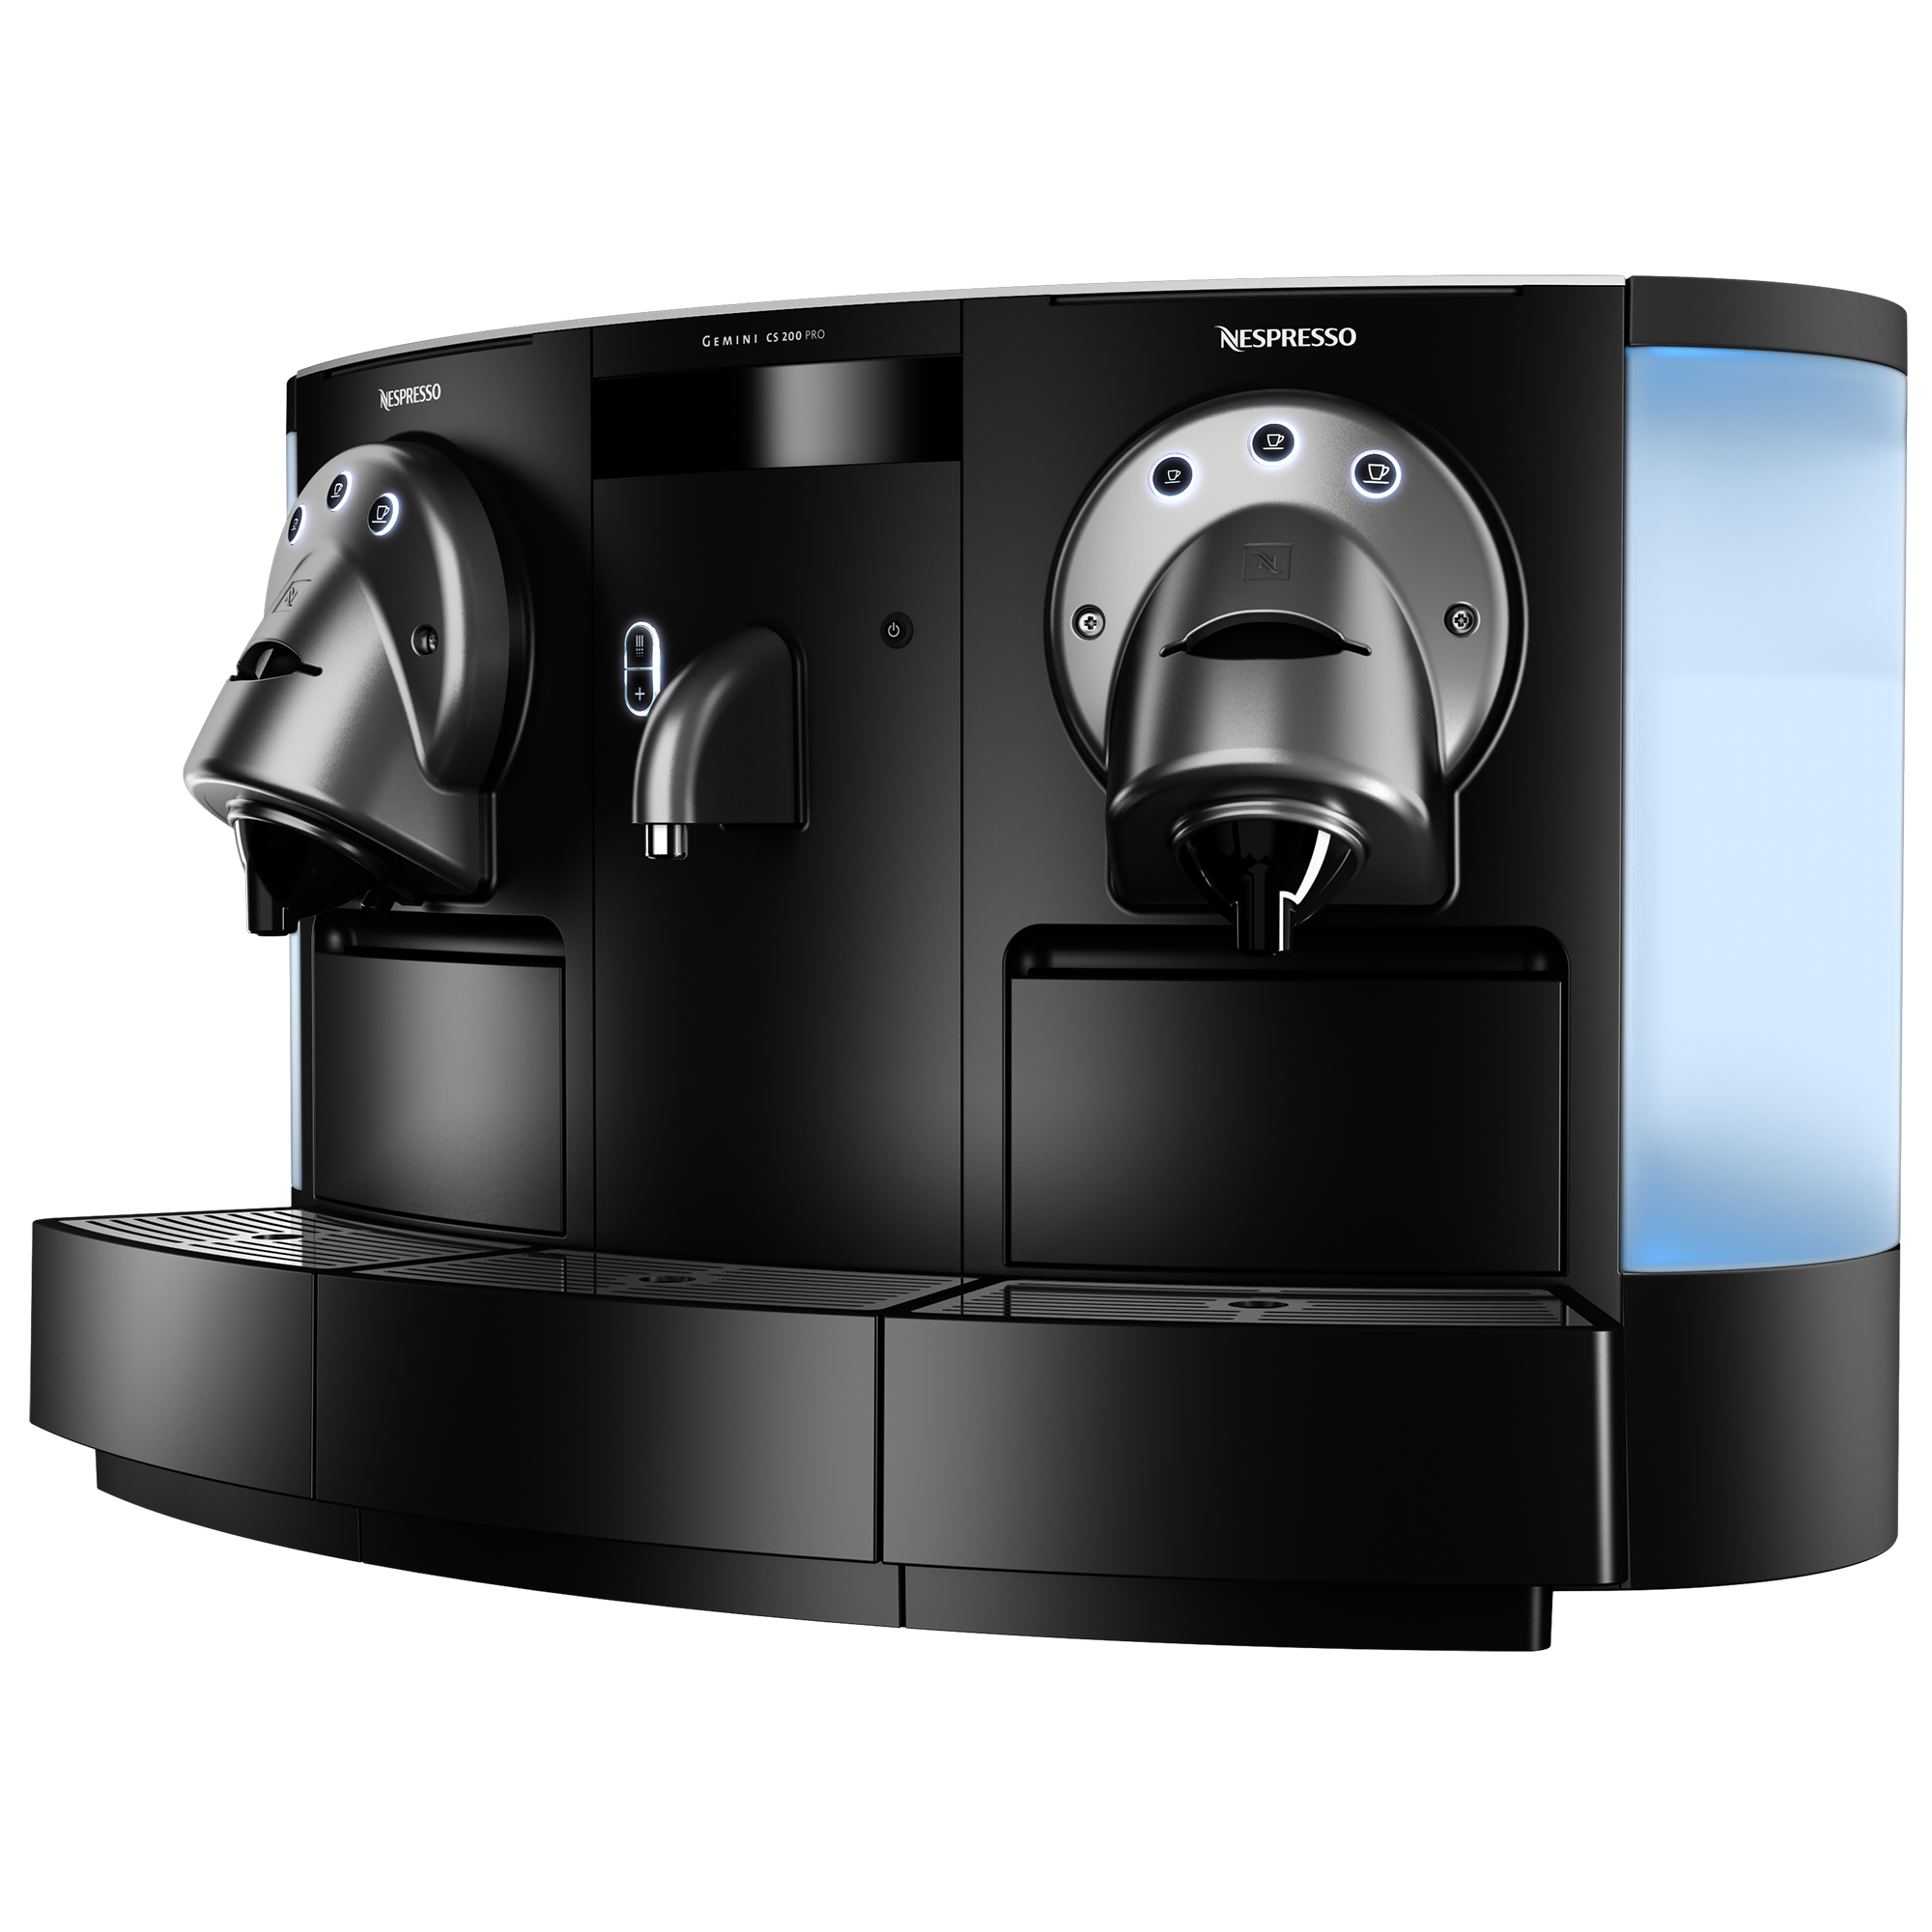 Dollar Grillig kosten Nespresso Gemini 200 coffee machine | Nespresso Professional